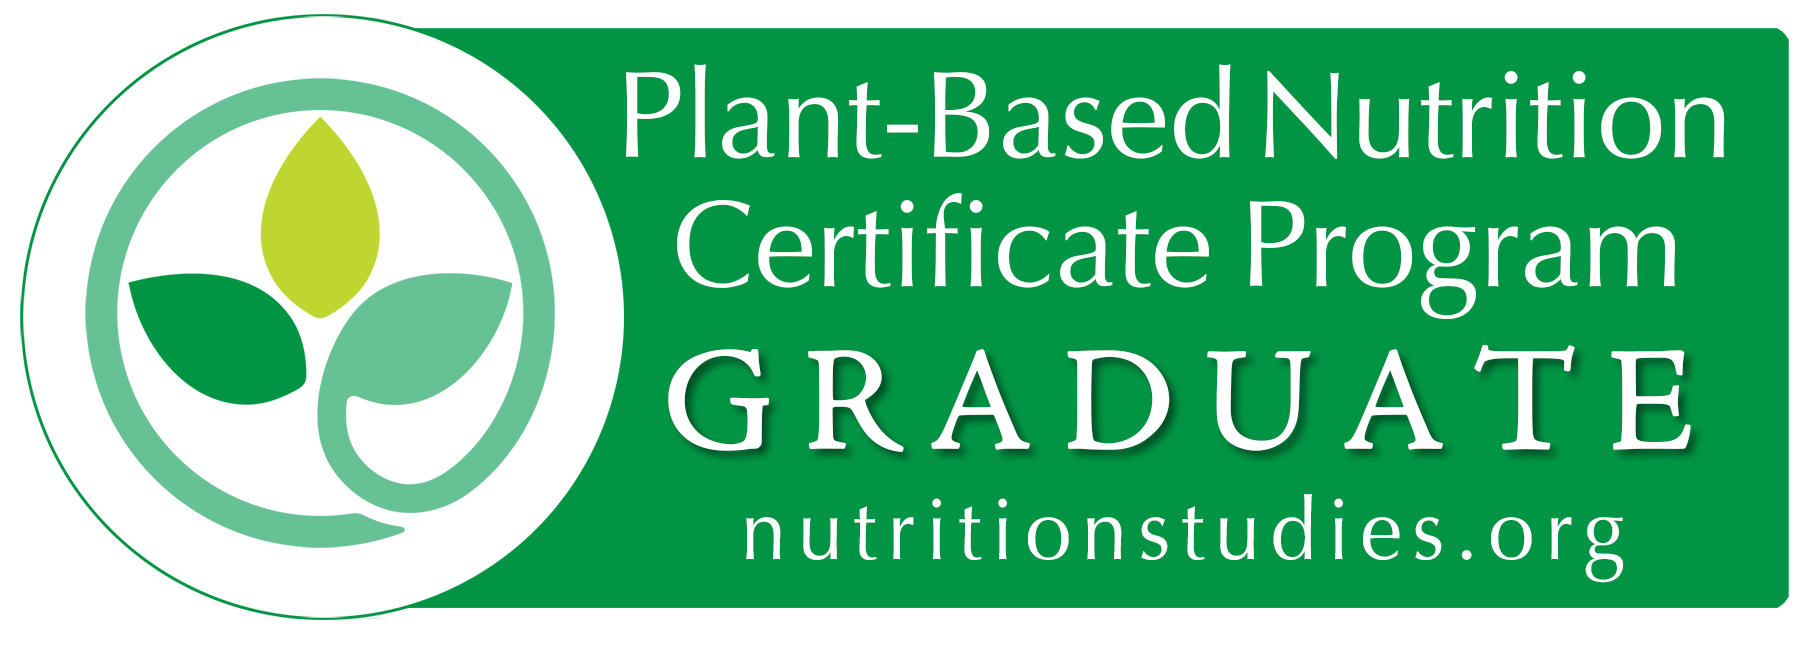 Plant-Basaed Nutrition Certificate Program Graduate PlantaeRevolution.com Andrea Bernal